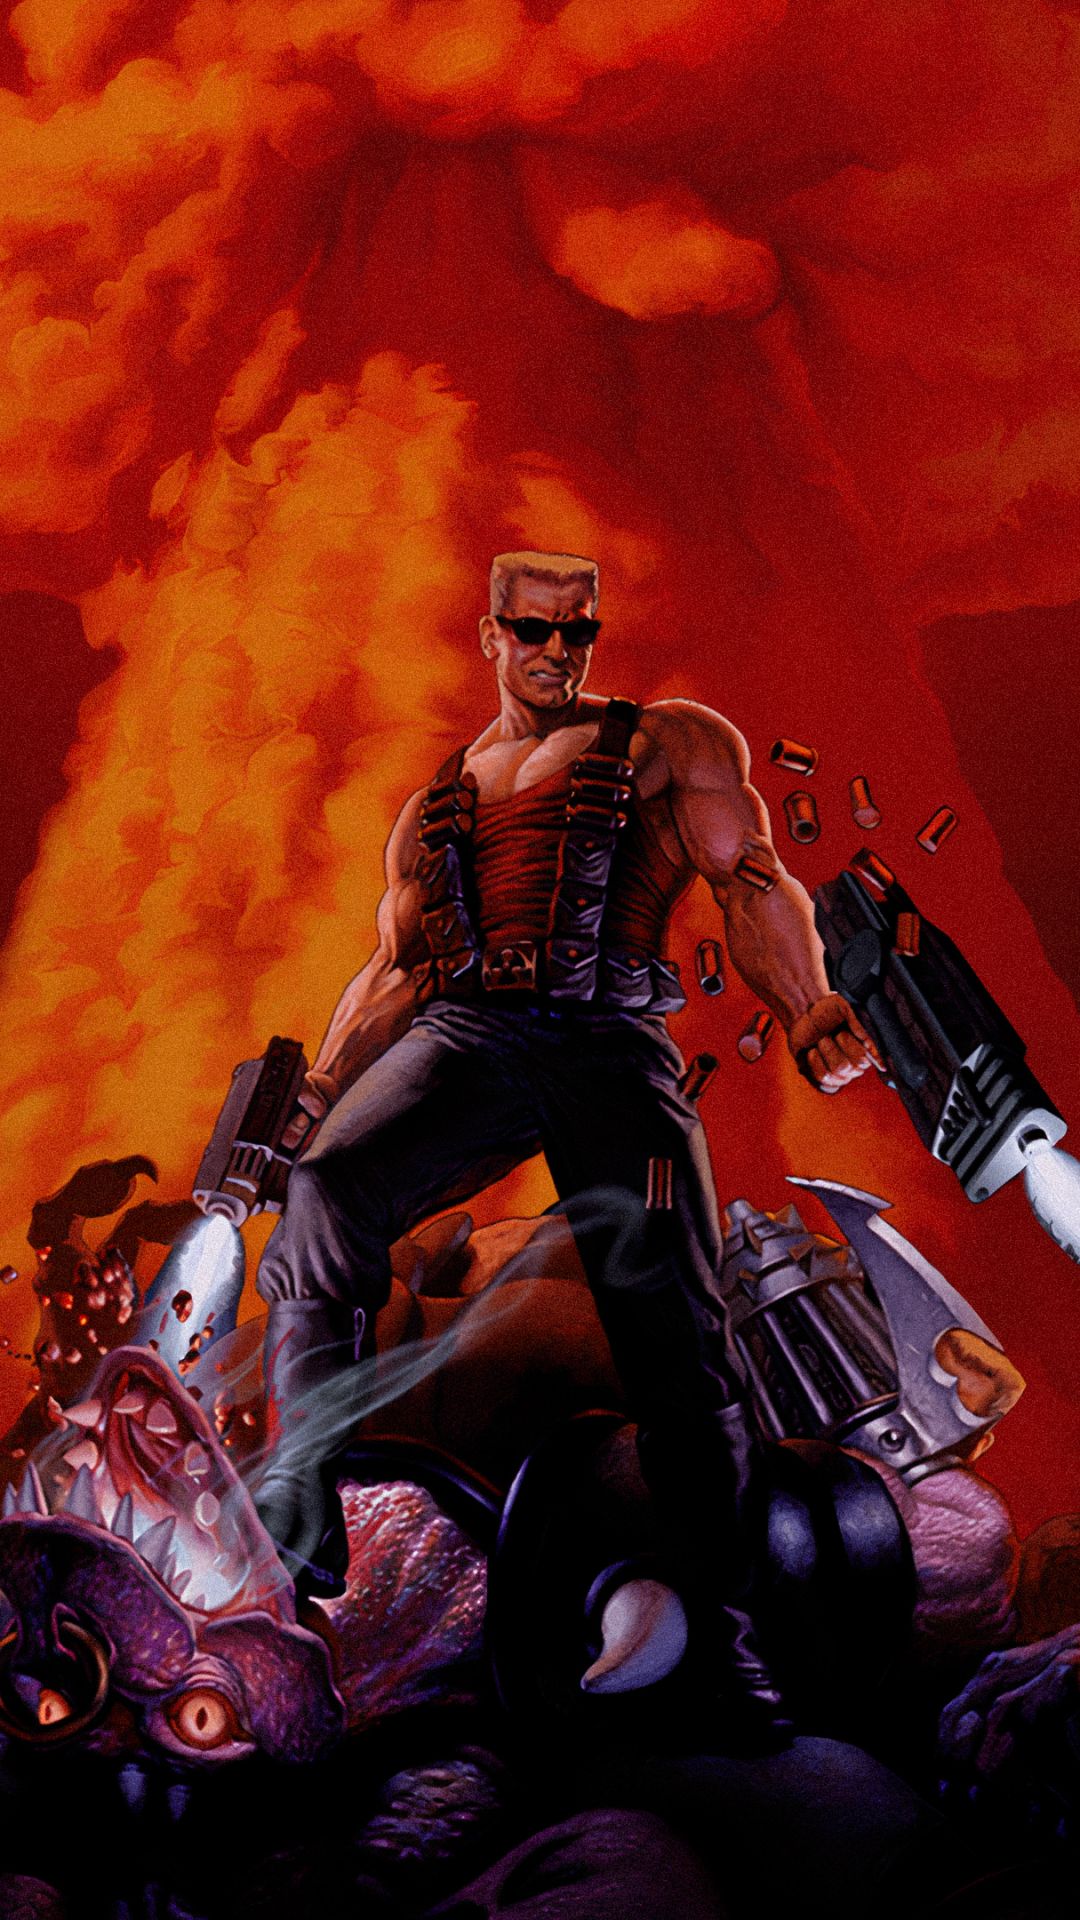 Descarga gratuita de fondo de pantalla para móvil de Duke Nukem, Videojuego, Duke Nukem 3D.